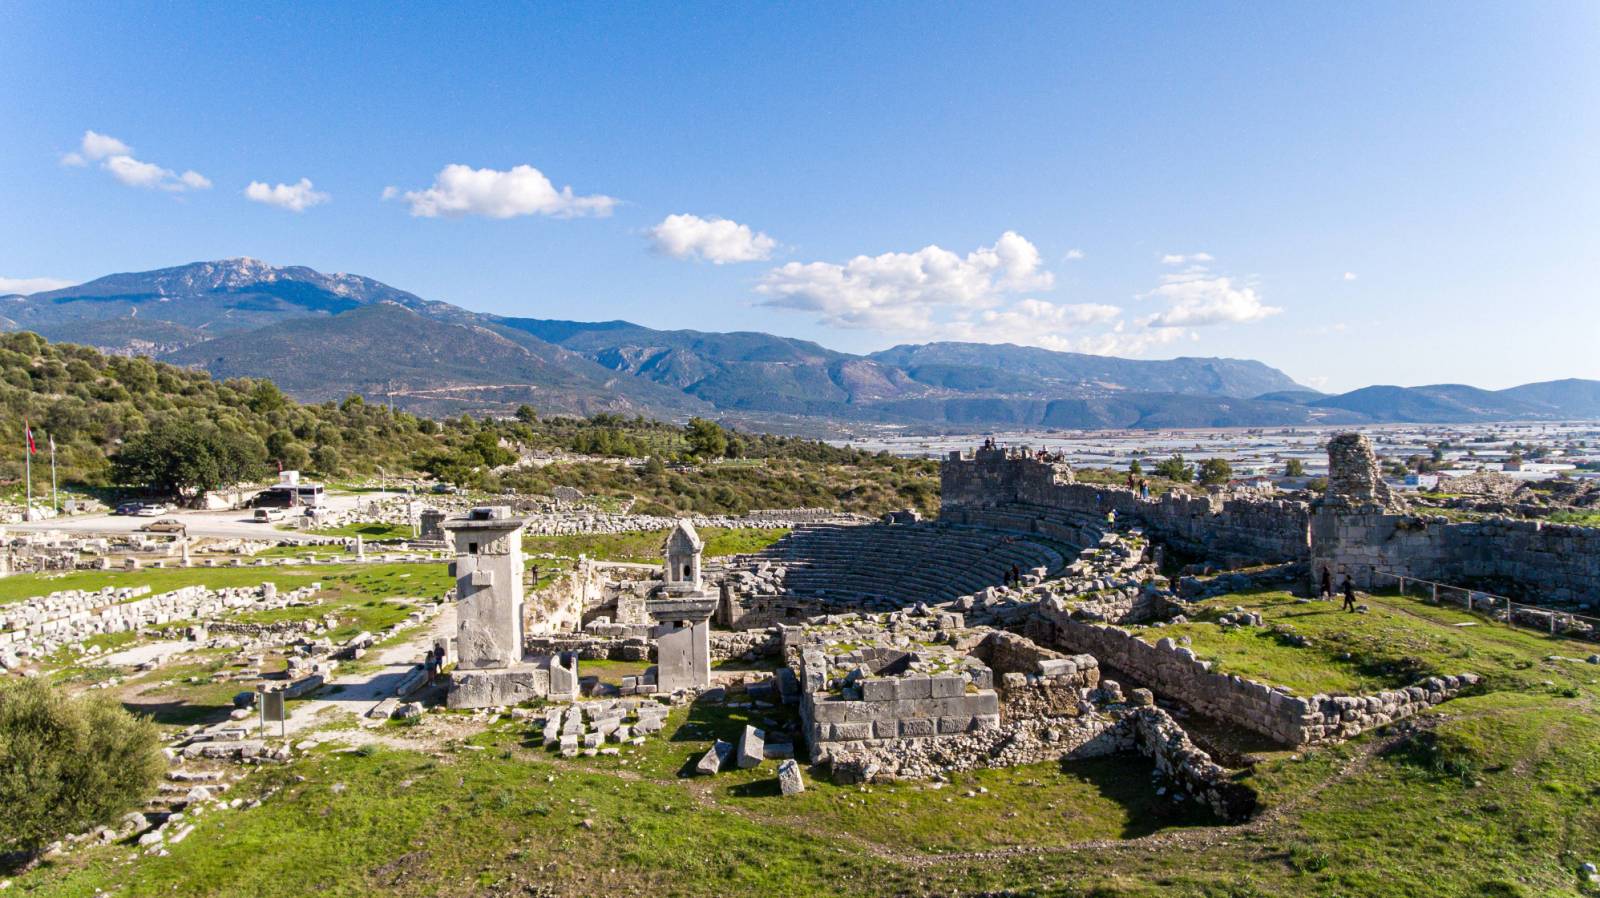 epska priča: kroz drevne gradove antičke historije